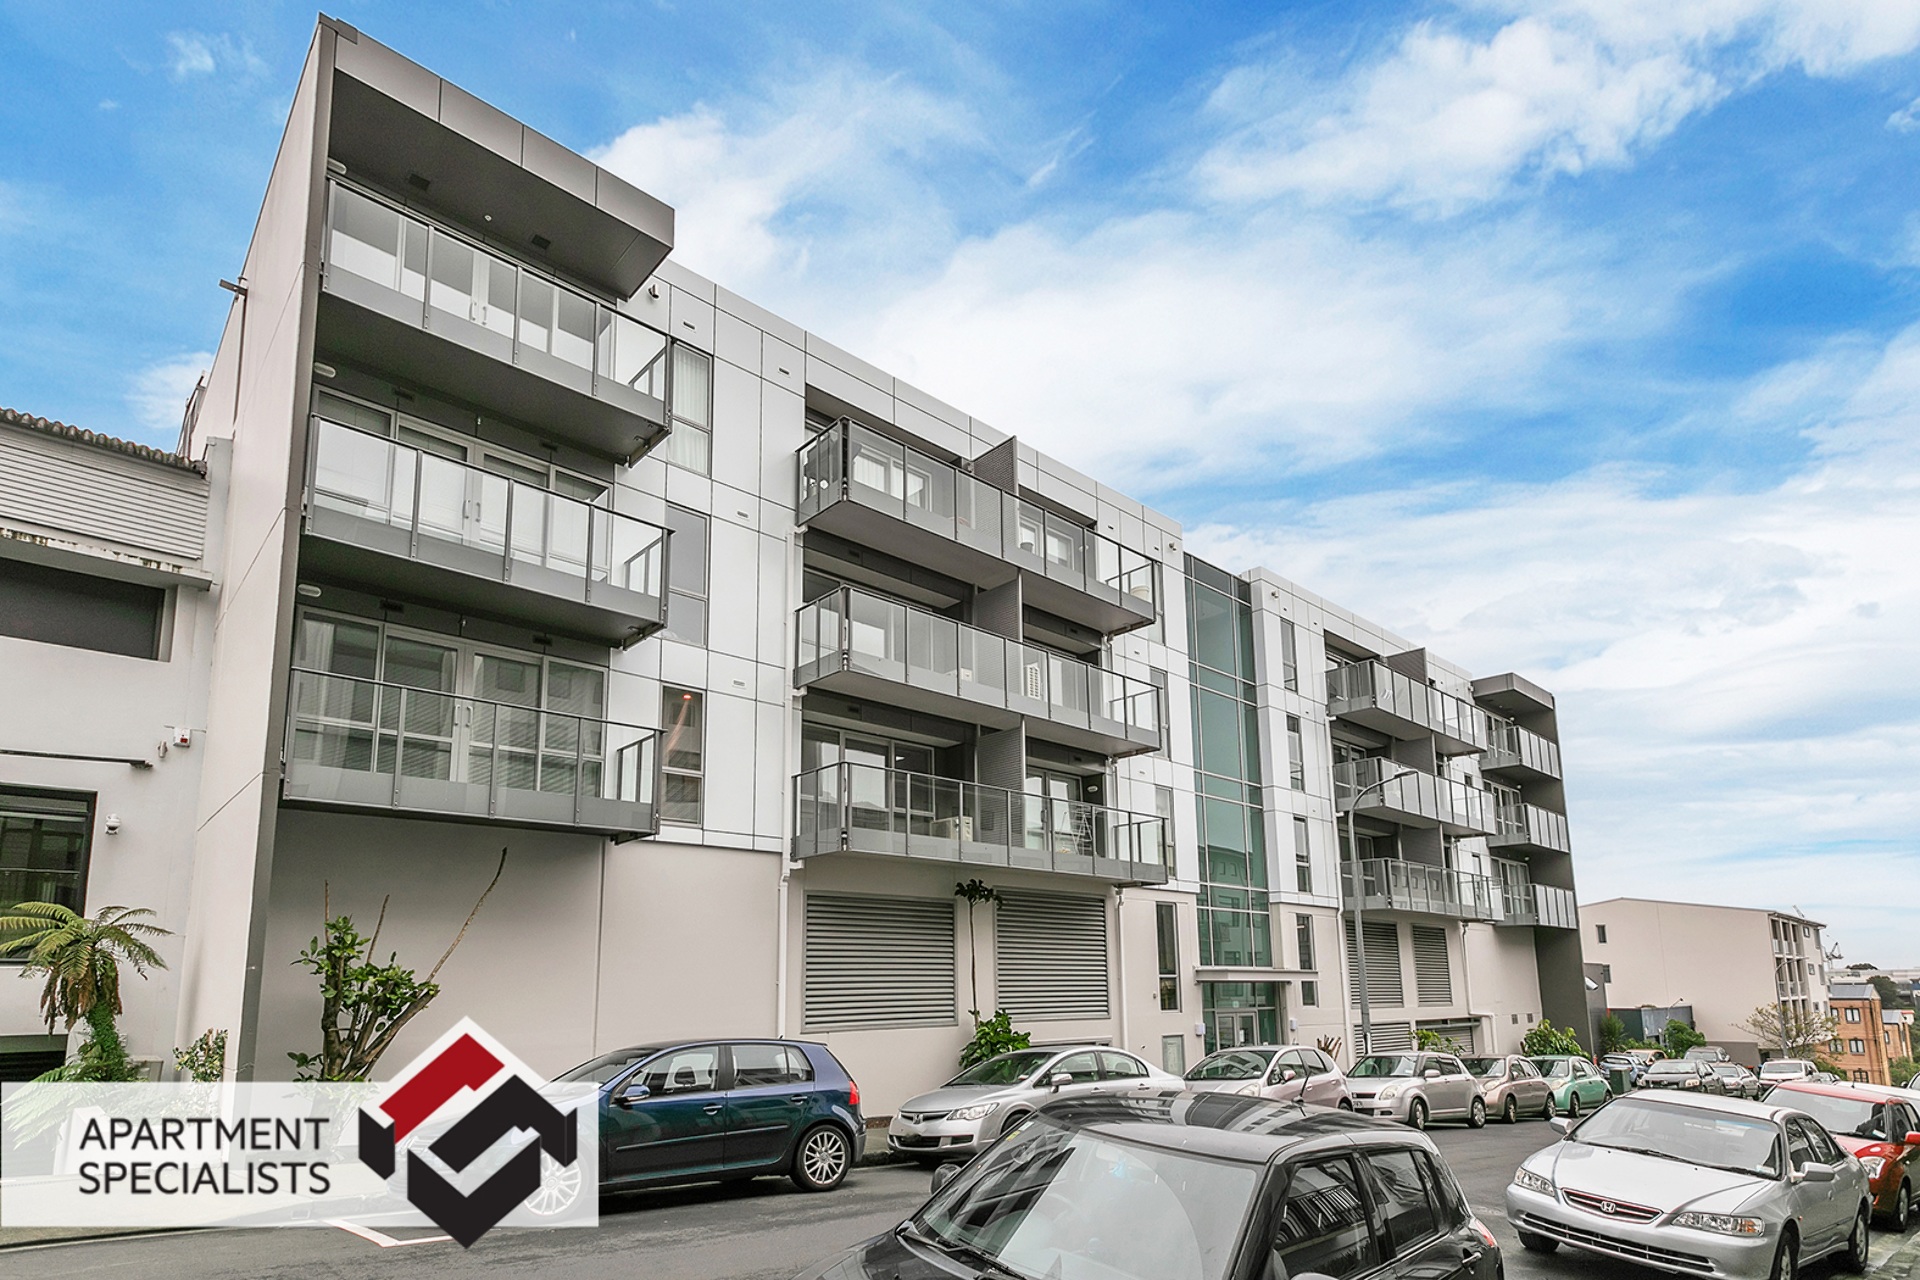 14 | 20 Charlotte Street, Eden Terrace | Apartment Specialists